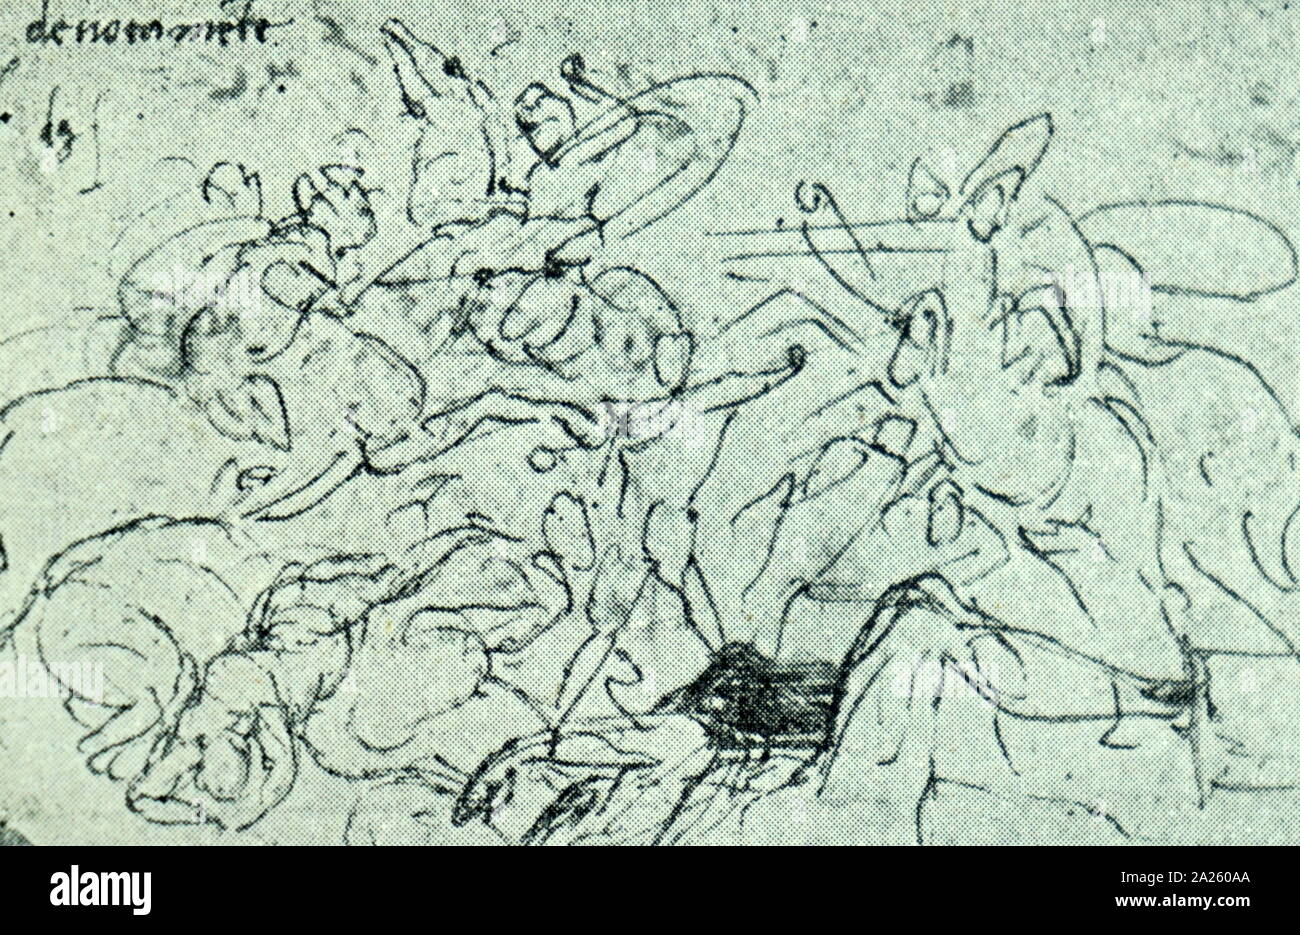 Anghiari Battle Cartoon, 1500. drawing by the Italian polymath Leonardo da Vinci (1452-1519) Stock Photo